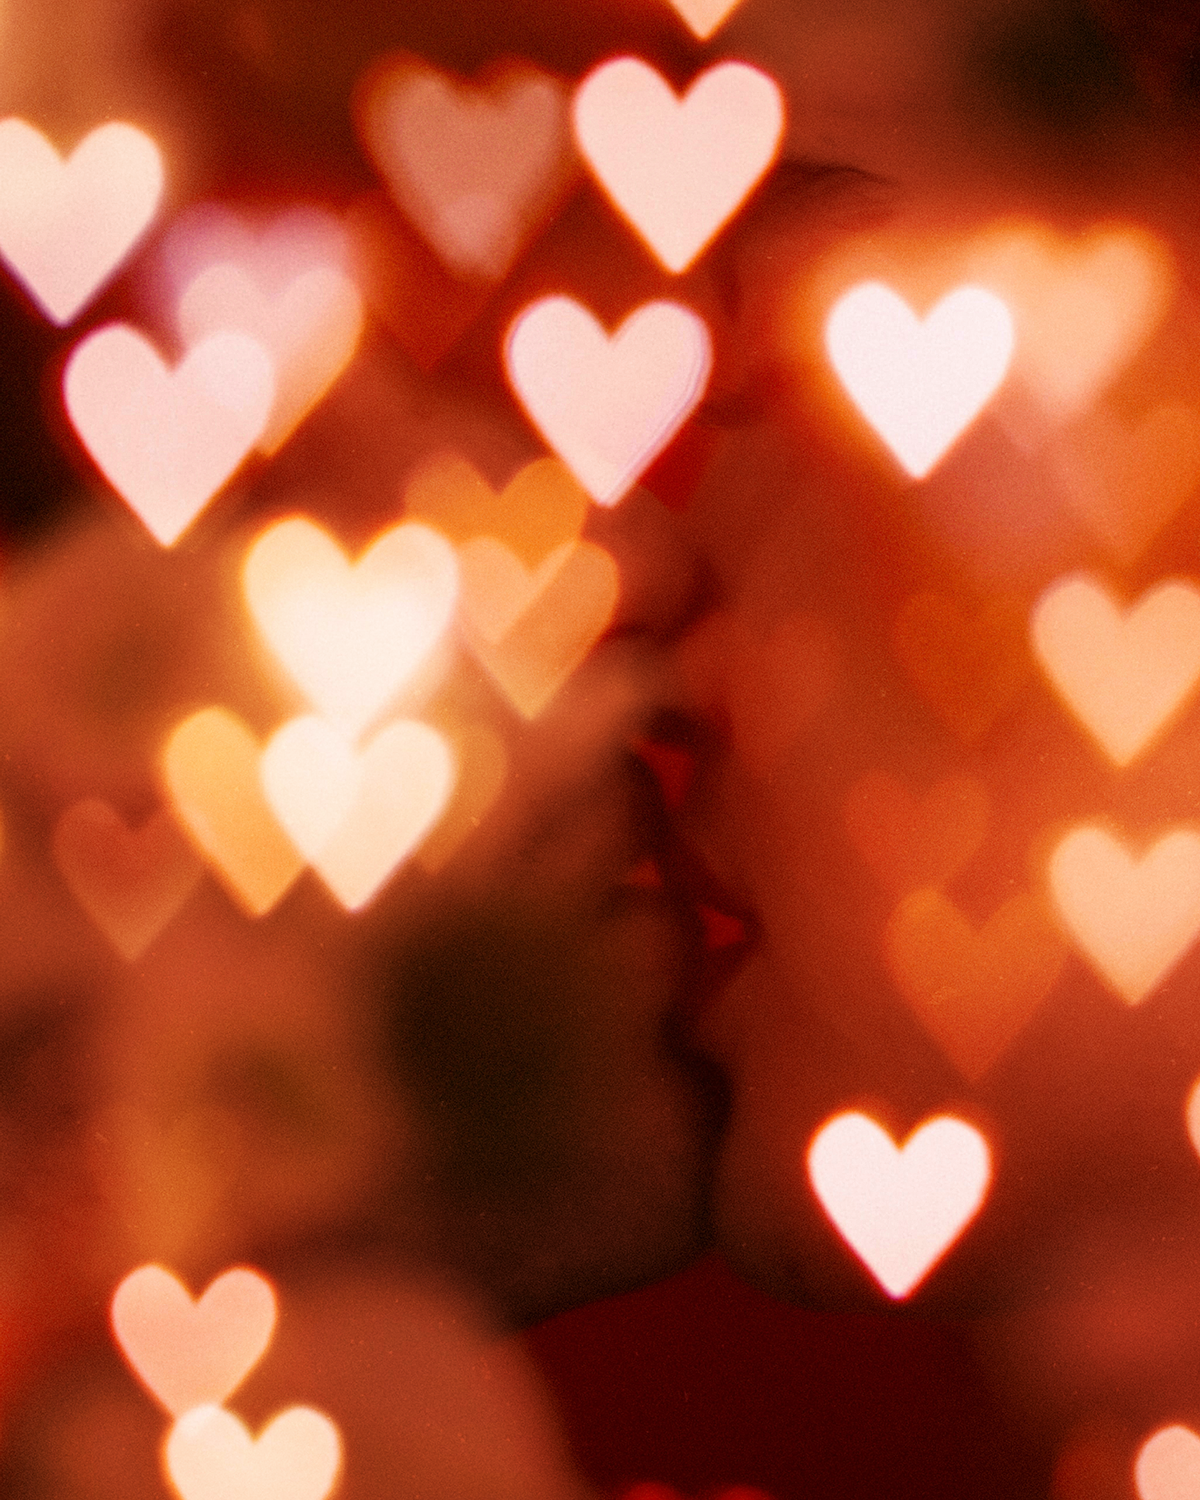 40 Cute Valentine's Day Date Ideas - Romantic Valentine's Plans